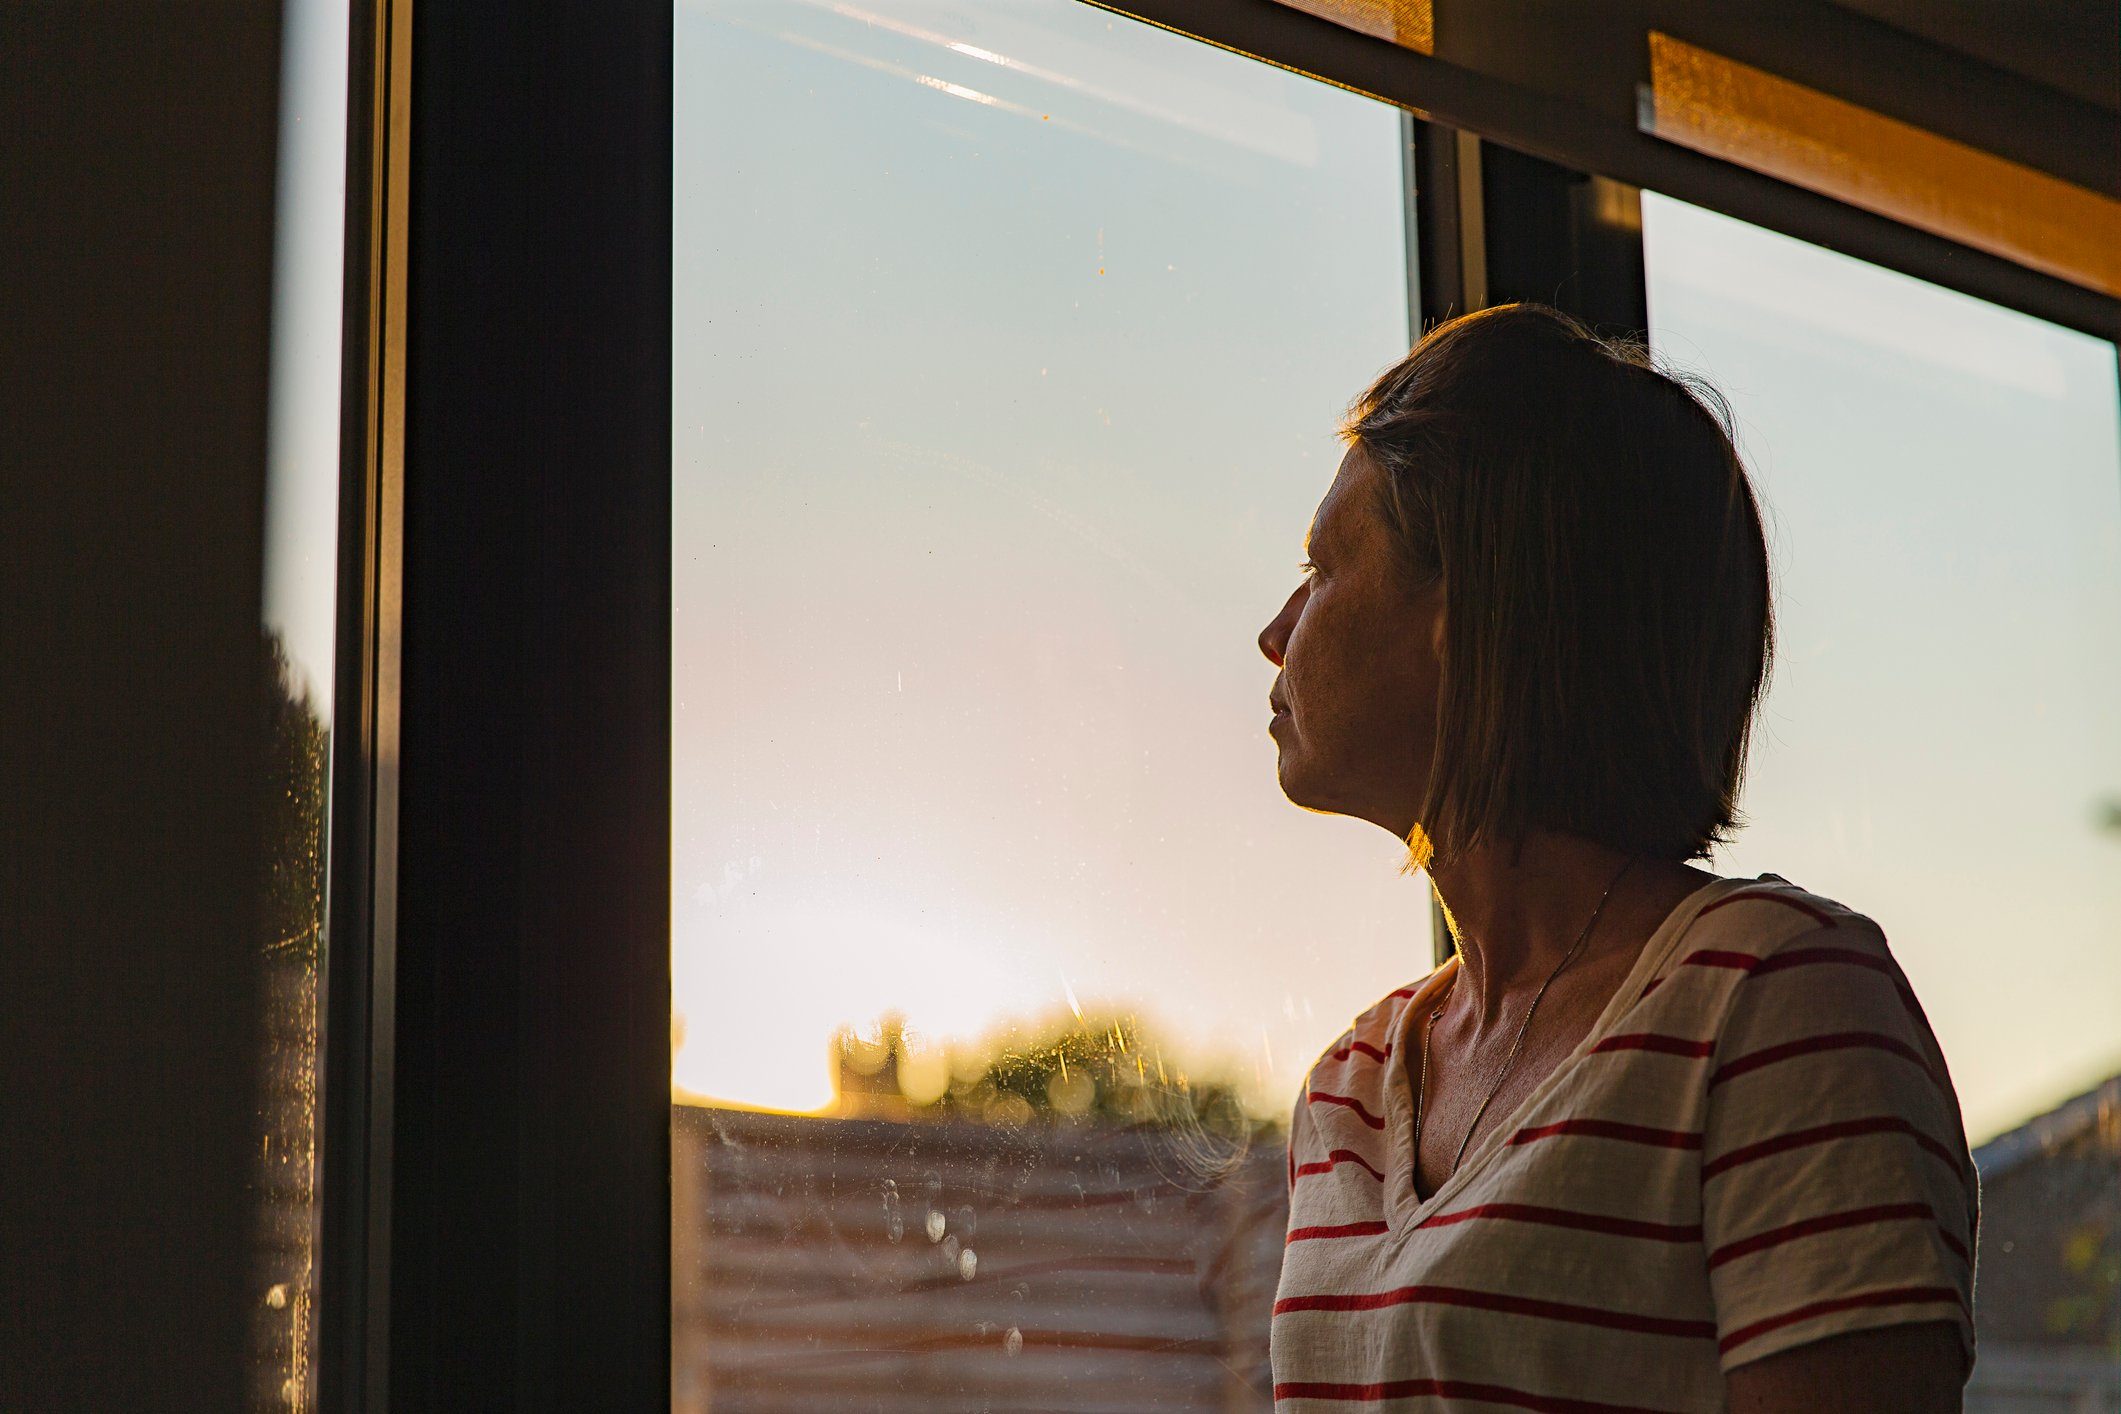 Woman looking through window - negative emotion